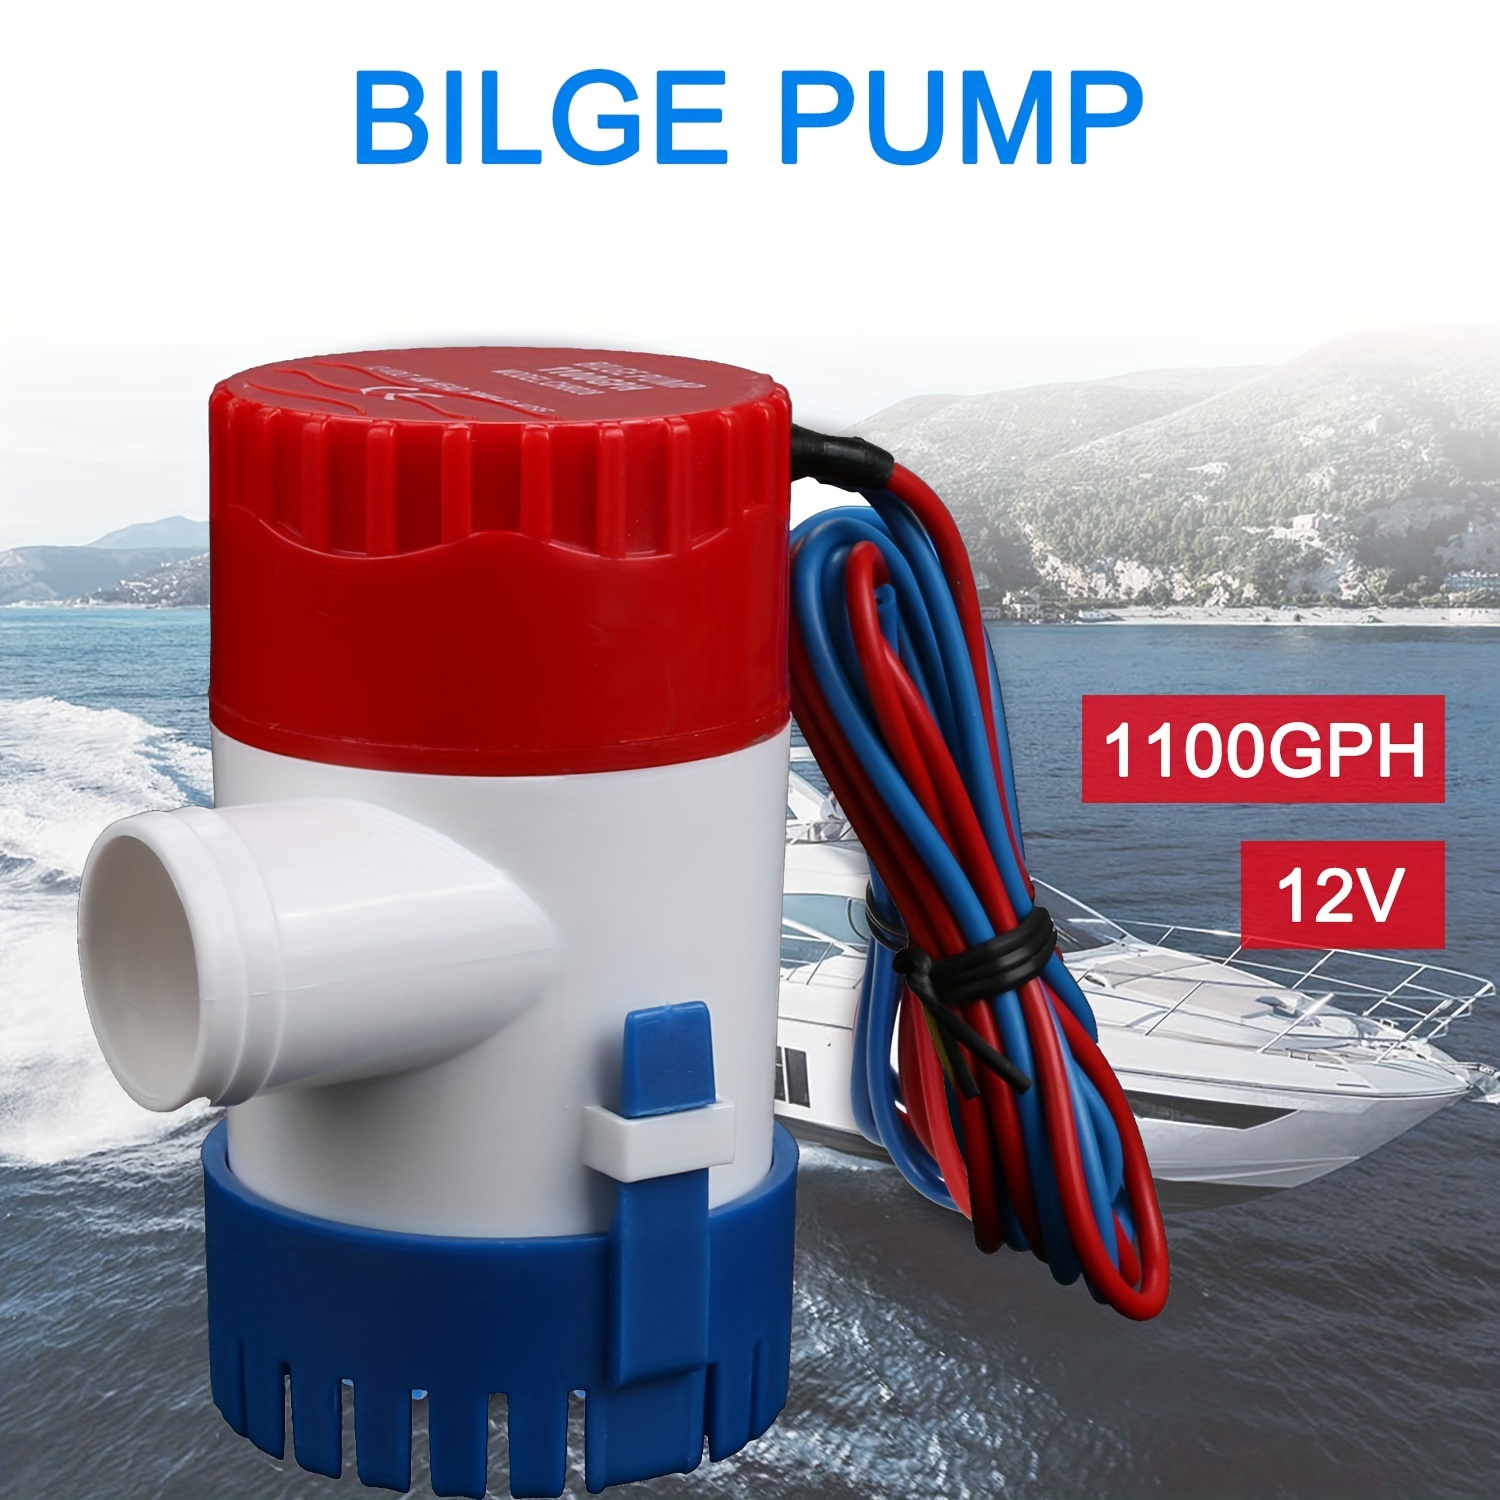 Bilge pump 12V 24V 750gph water pump used in boat seaplane motor homes  houseboat